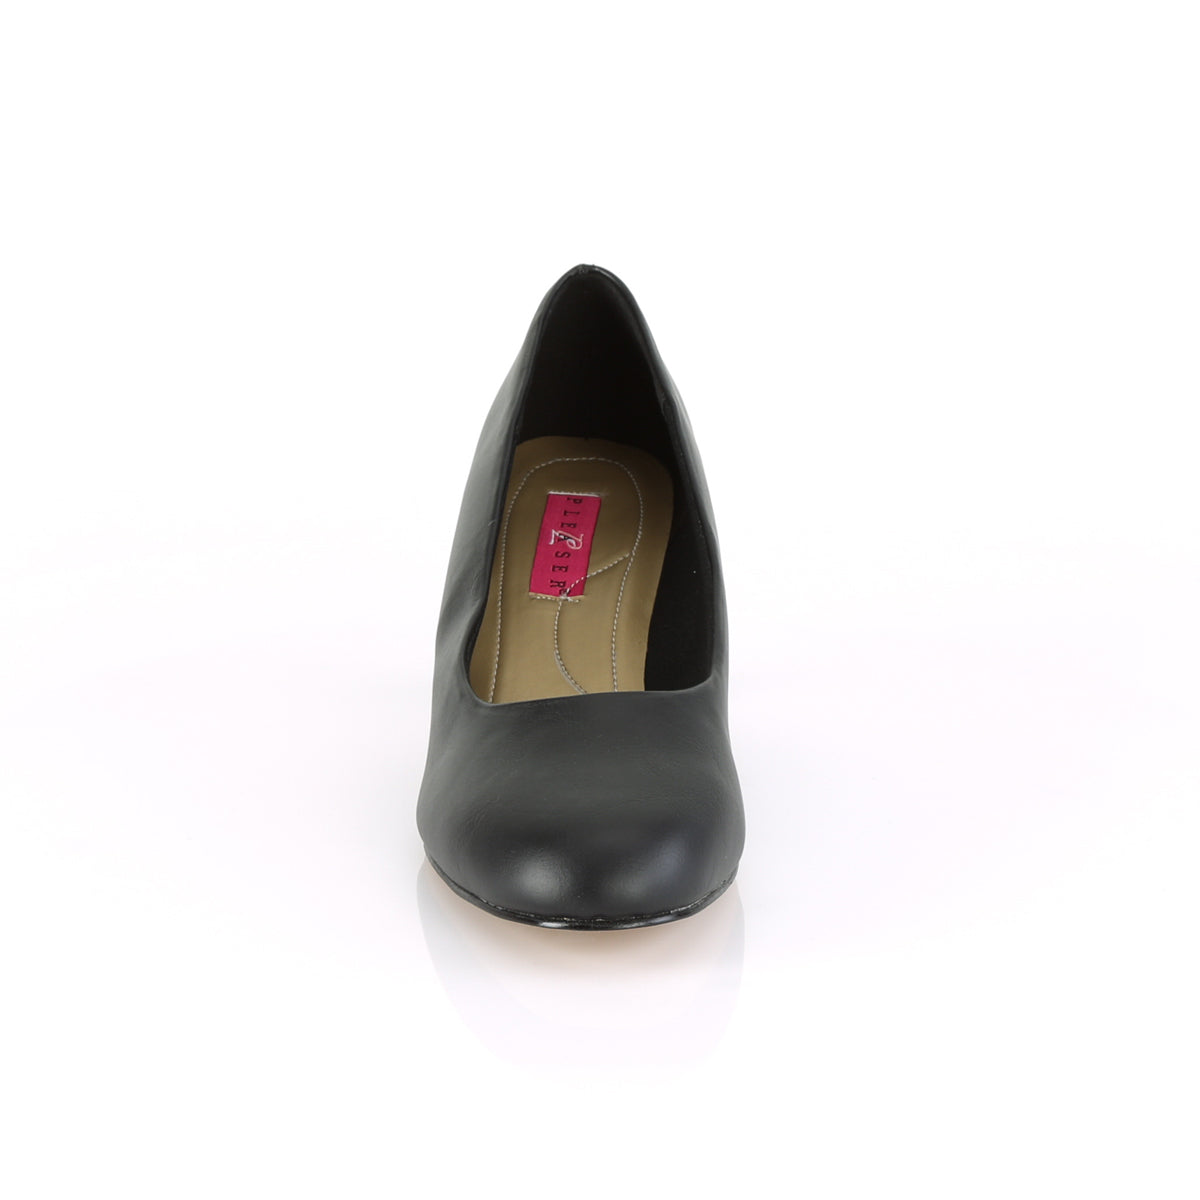 FEFE-01 Large Size Ladies Shoes Pleaser Pink Label Single Soles Black Faux Leather